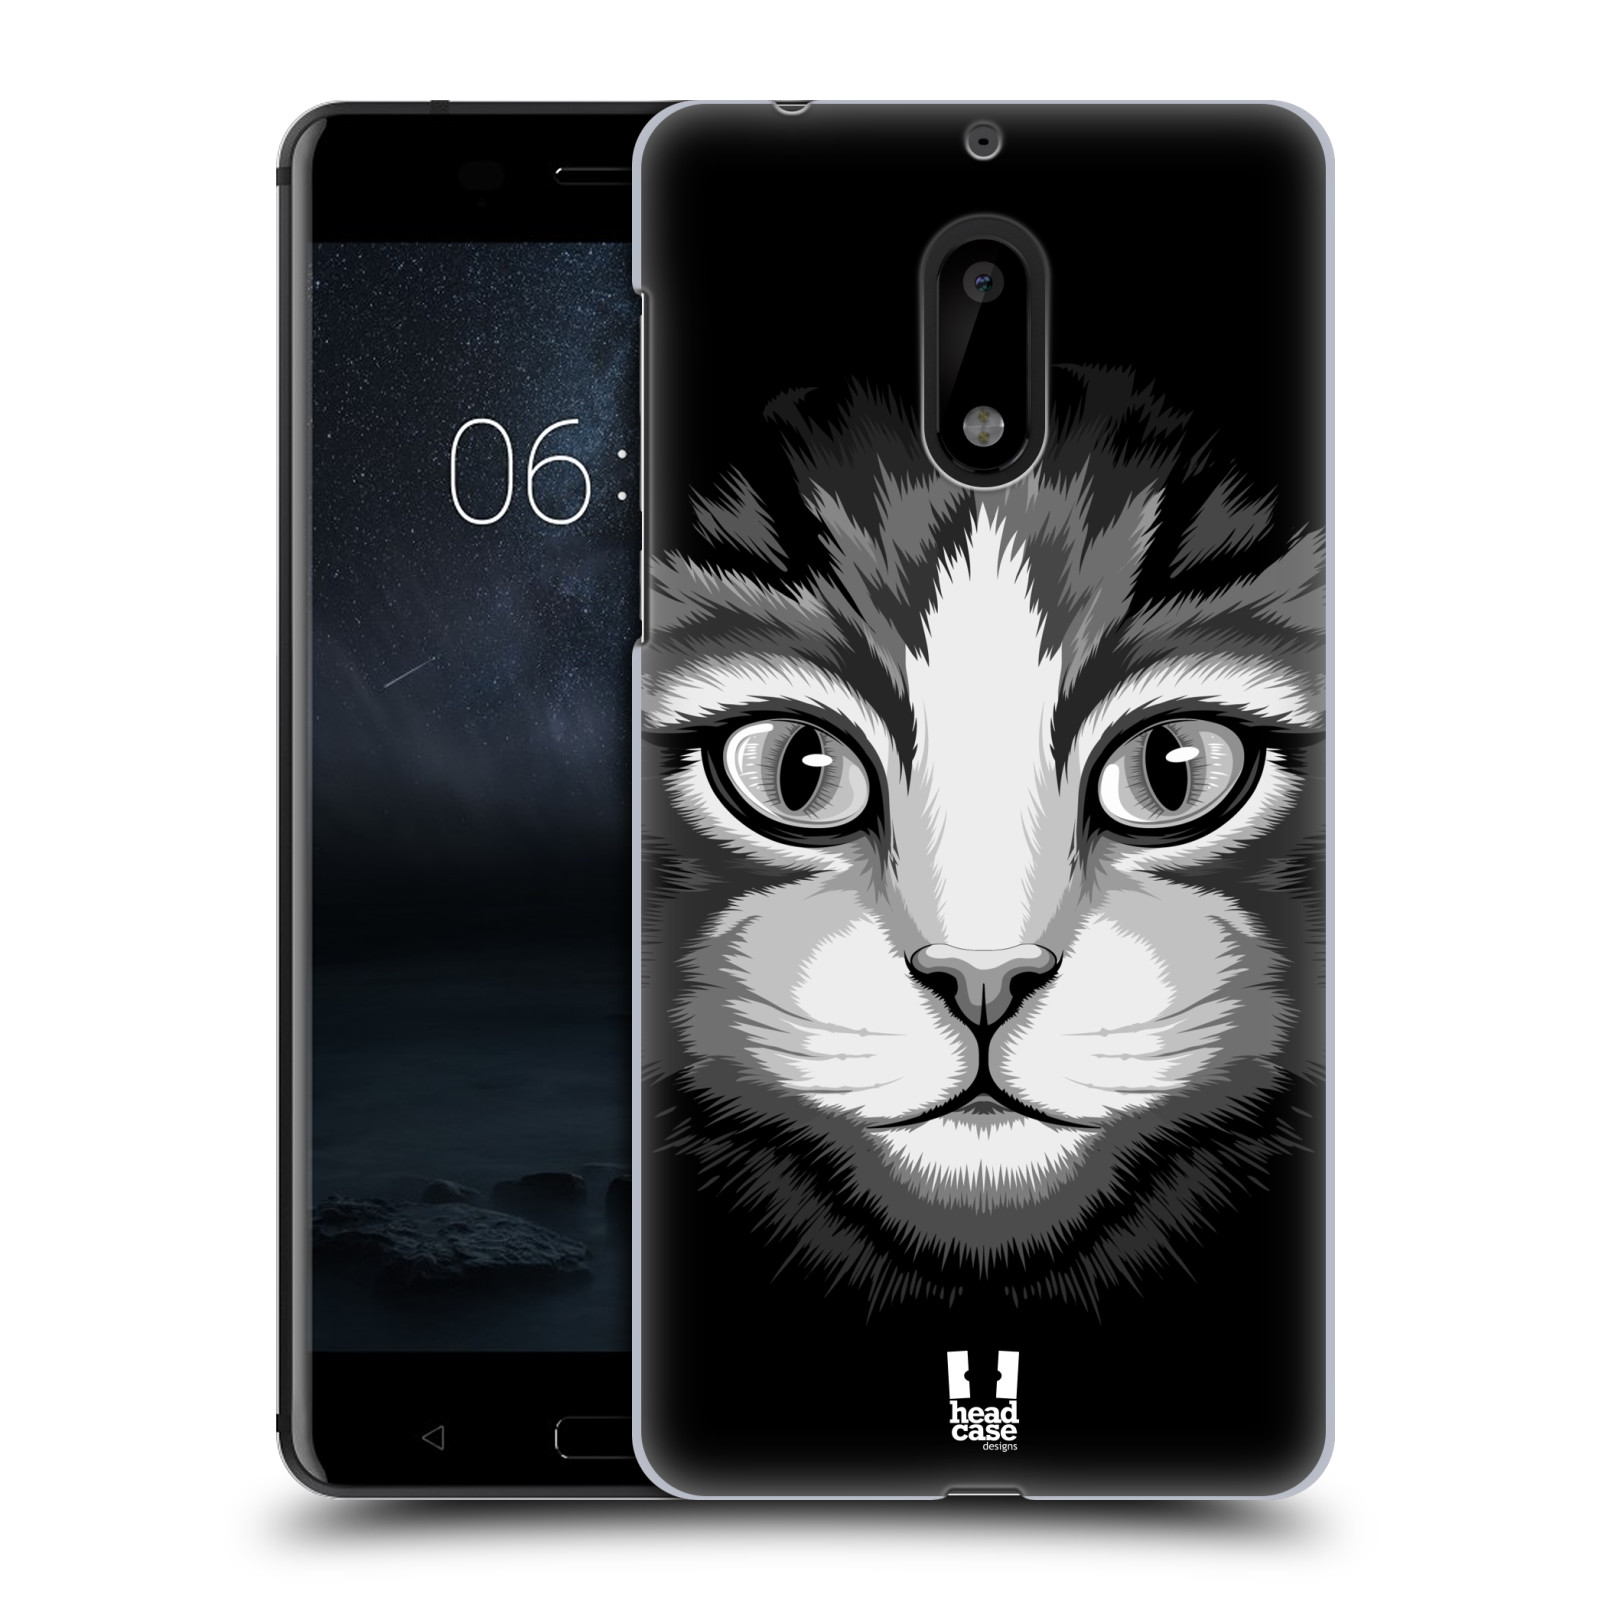 HEAD CASE plastový obal na mobil Nokia 6 vzor Zvíře kreslená tvář 2 kočička